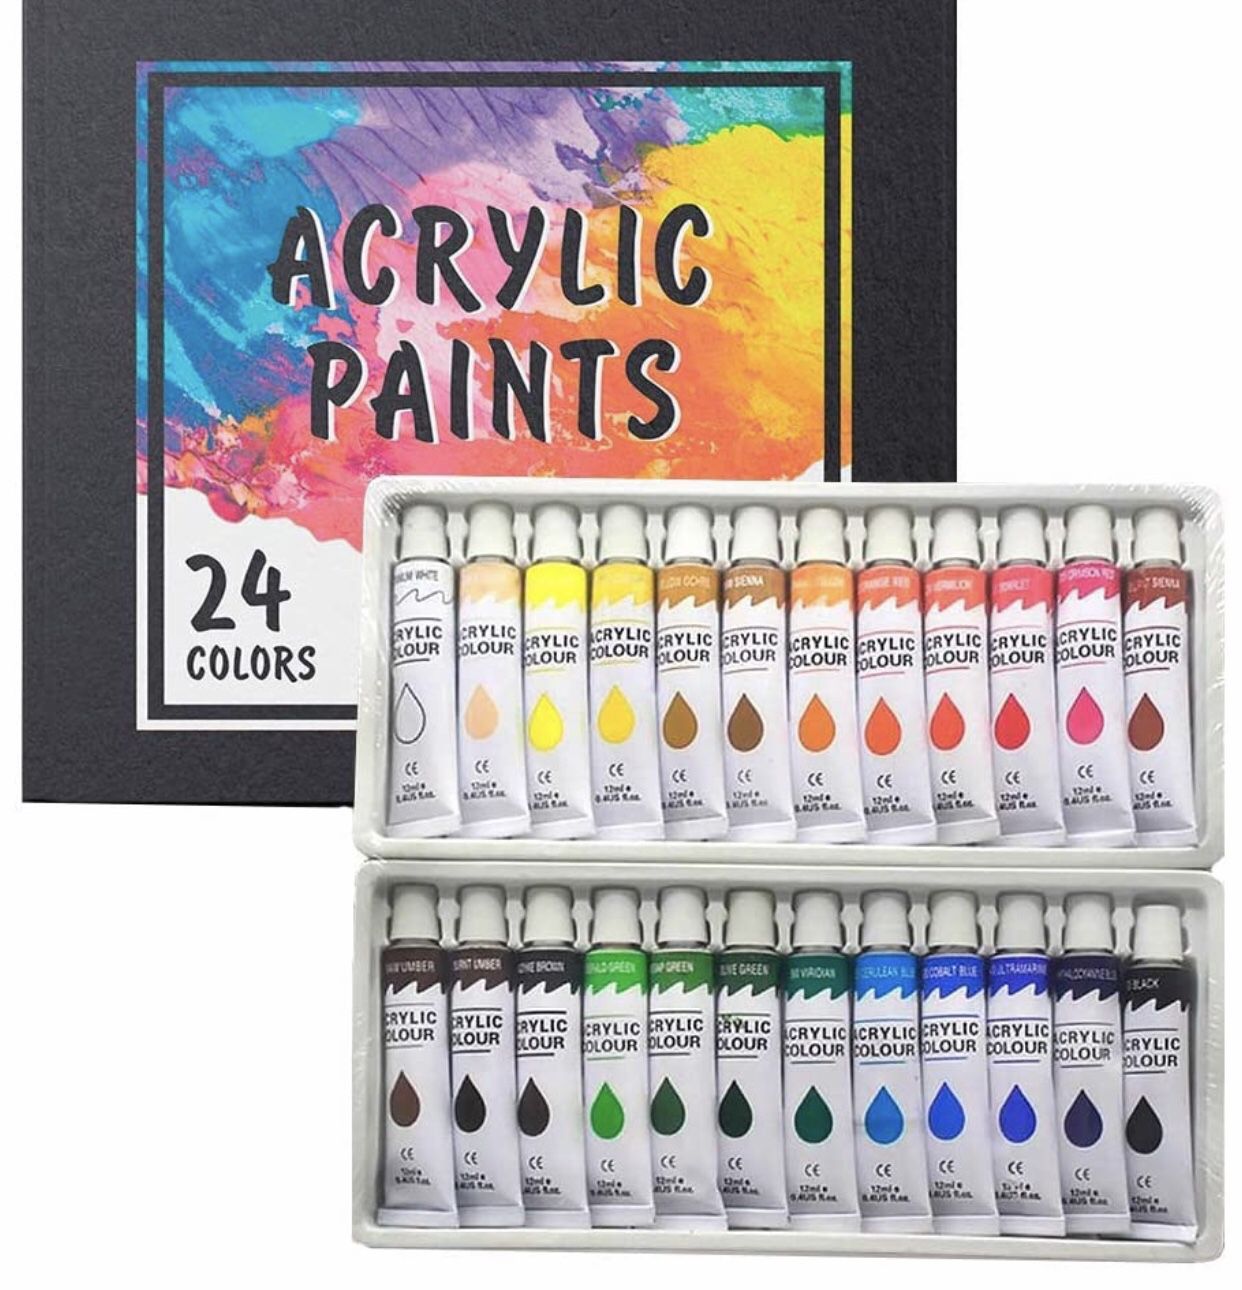 Acrylic paint set 24 colors/tube